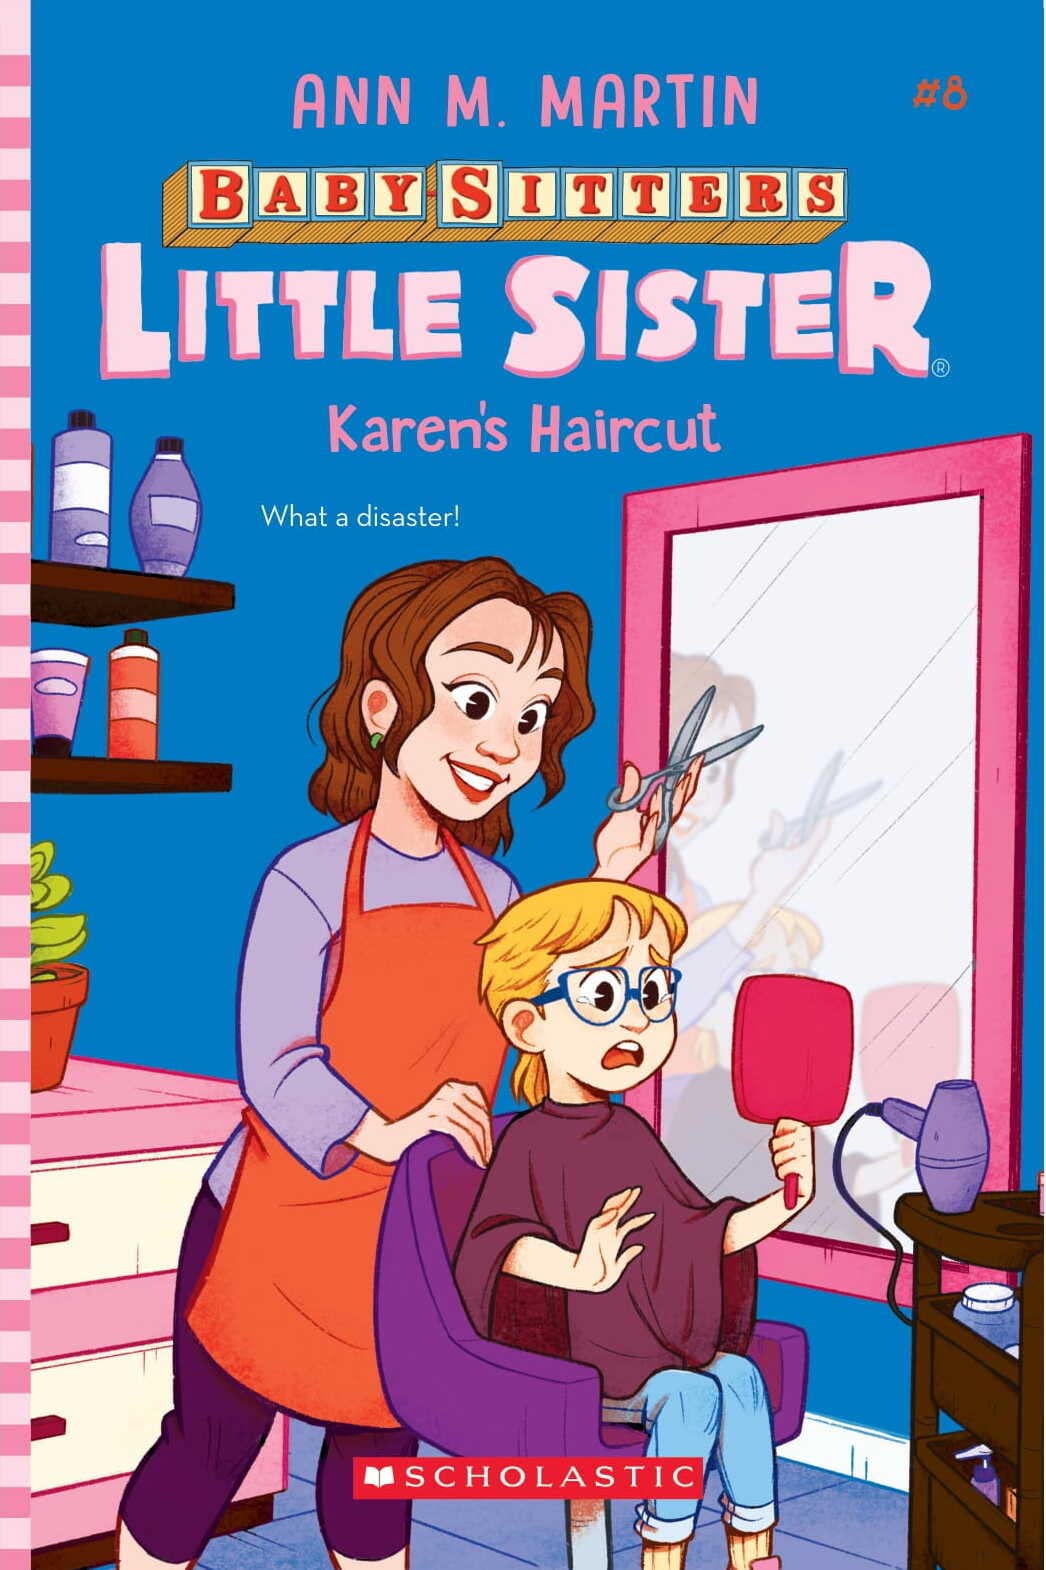 Baby-Sitters Little Sister #8: Karen's Haircut